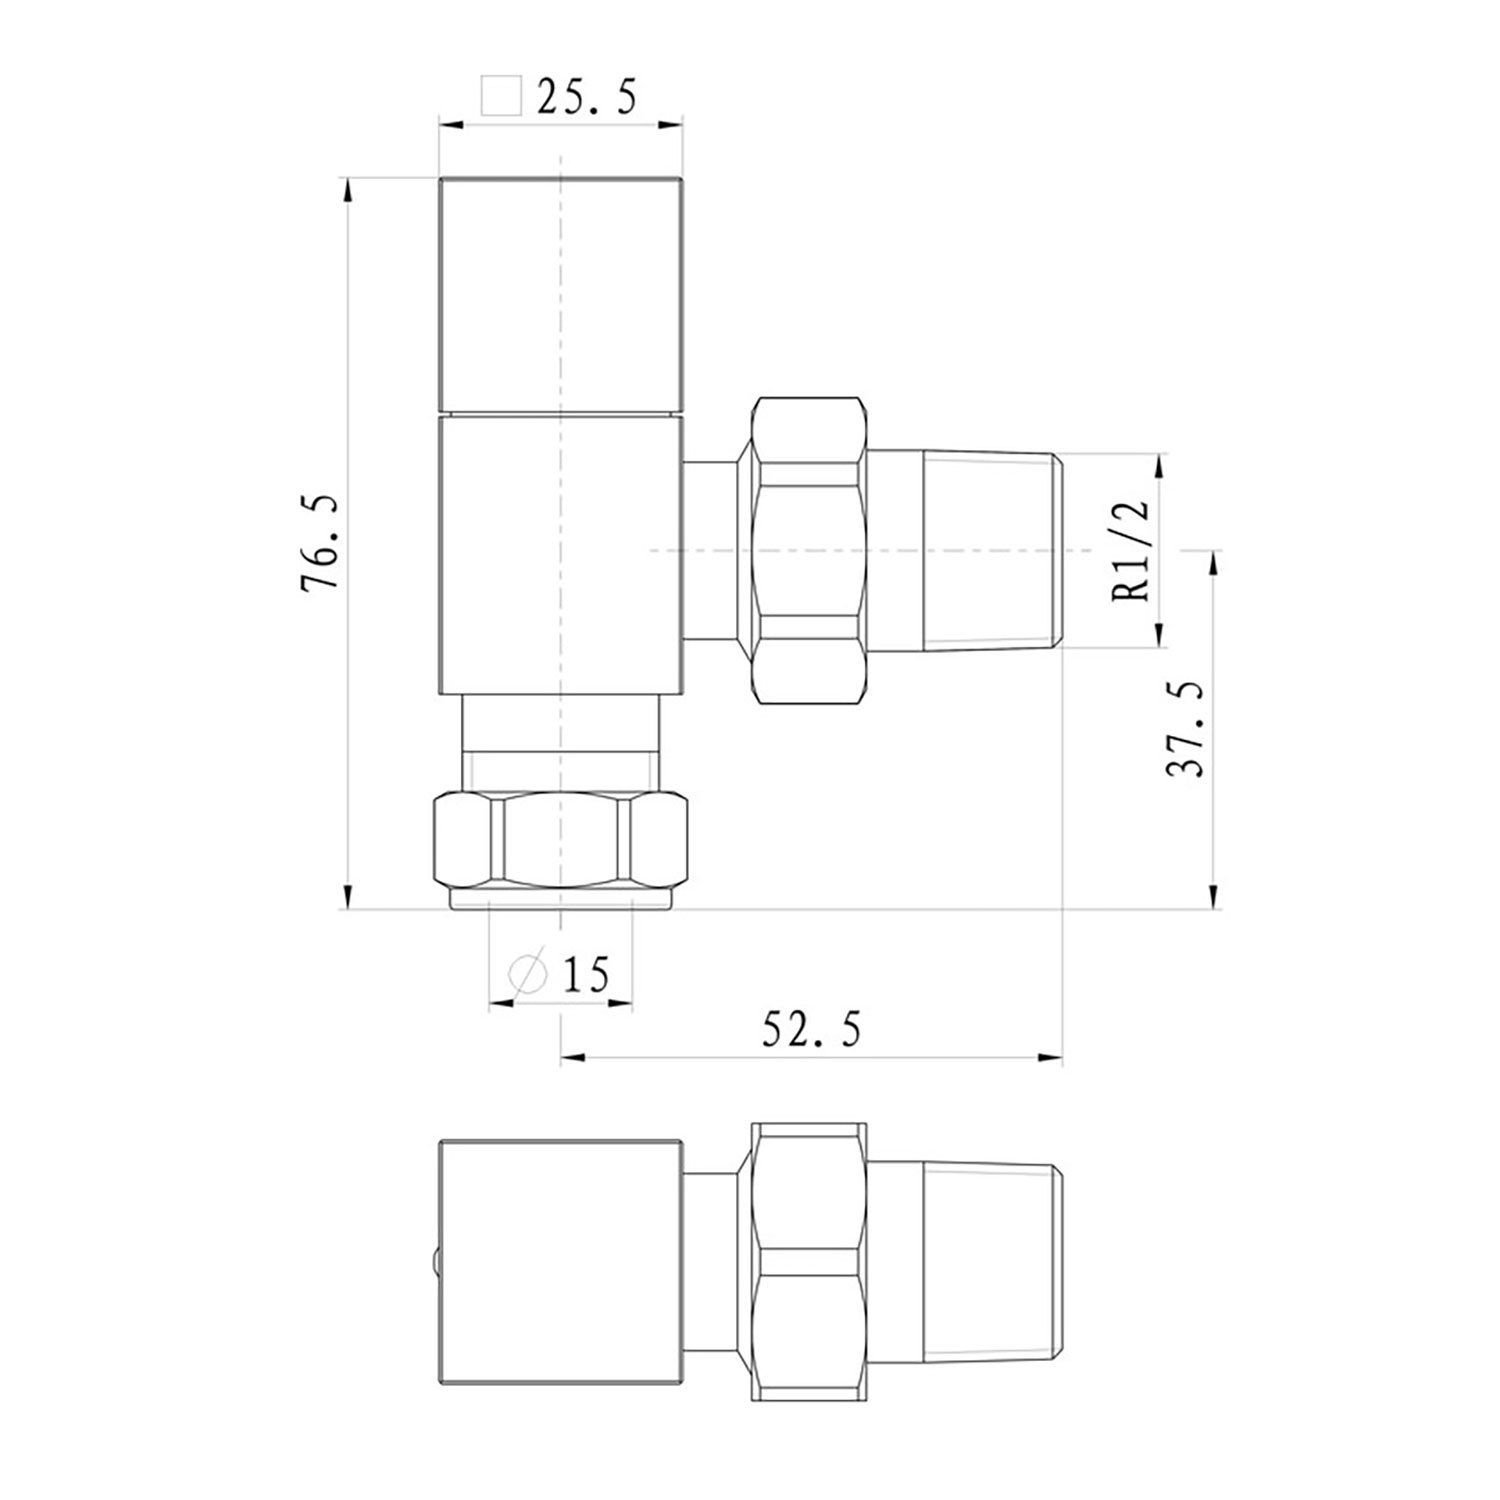 Square chrome angled radiator valves - dimensions